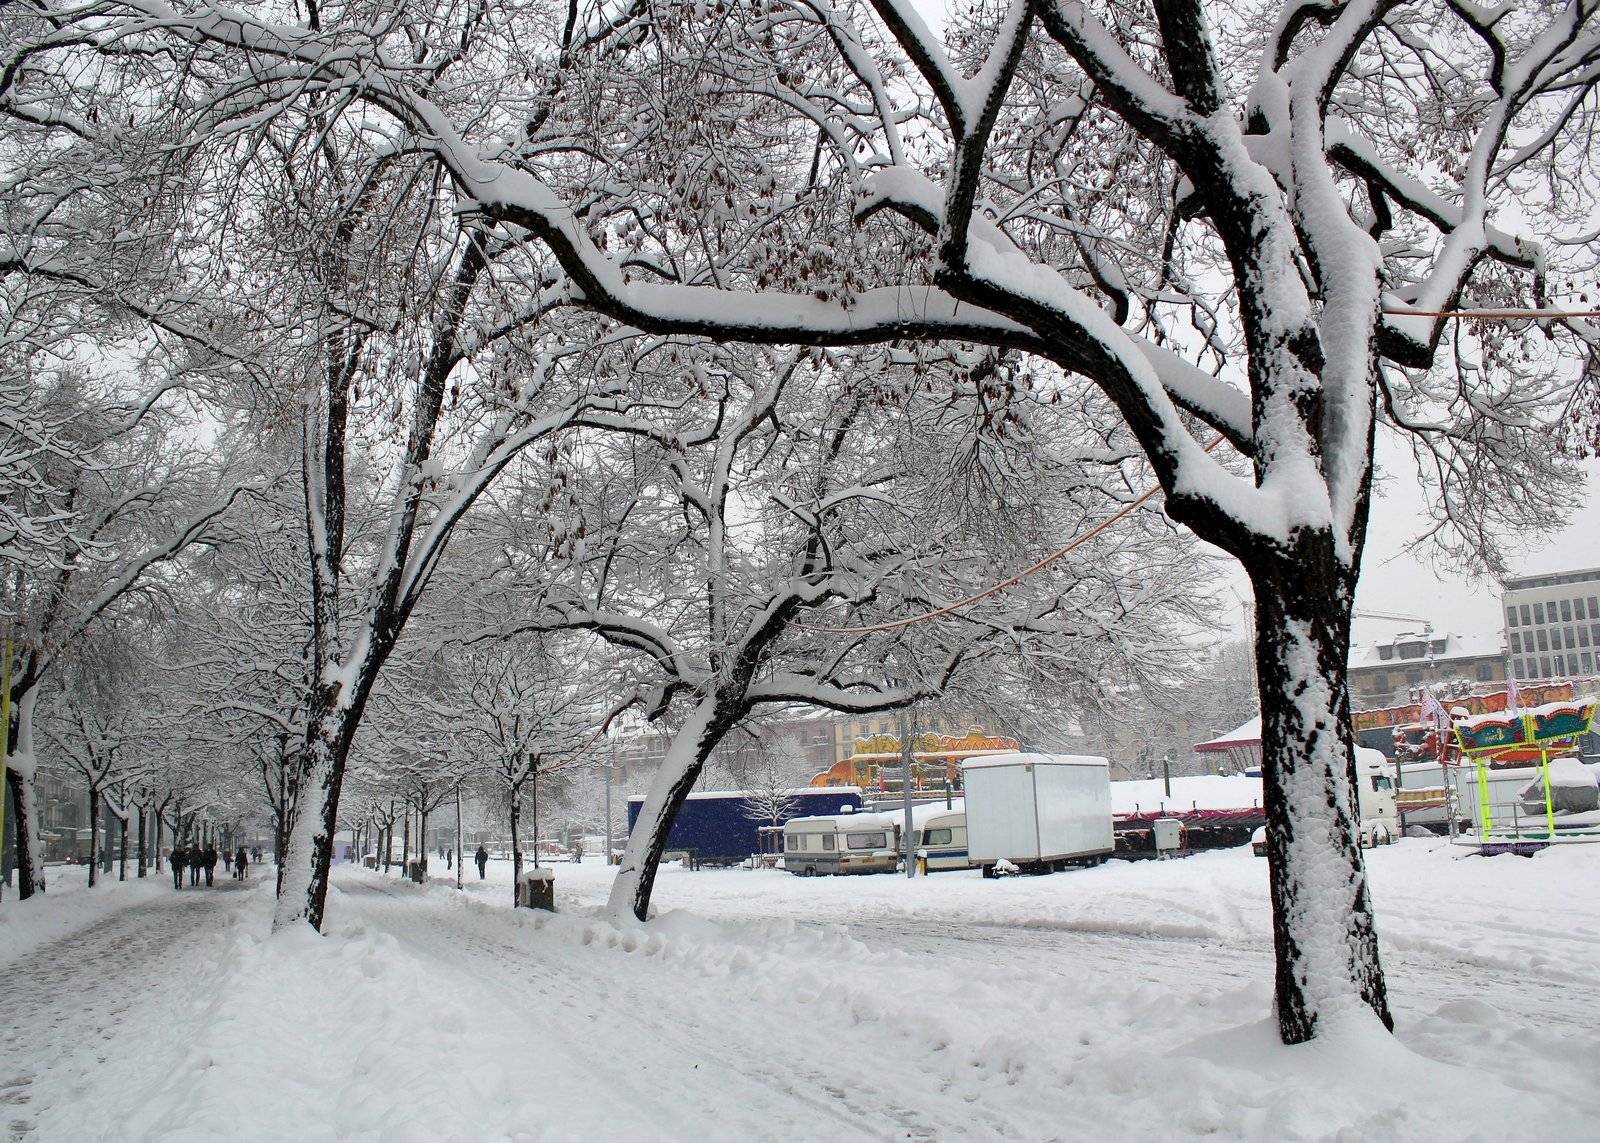 Plainpalais place by winter, Geneva, Switzerland by Elenaphotos21